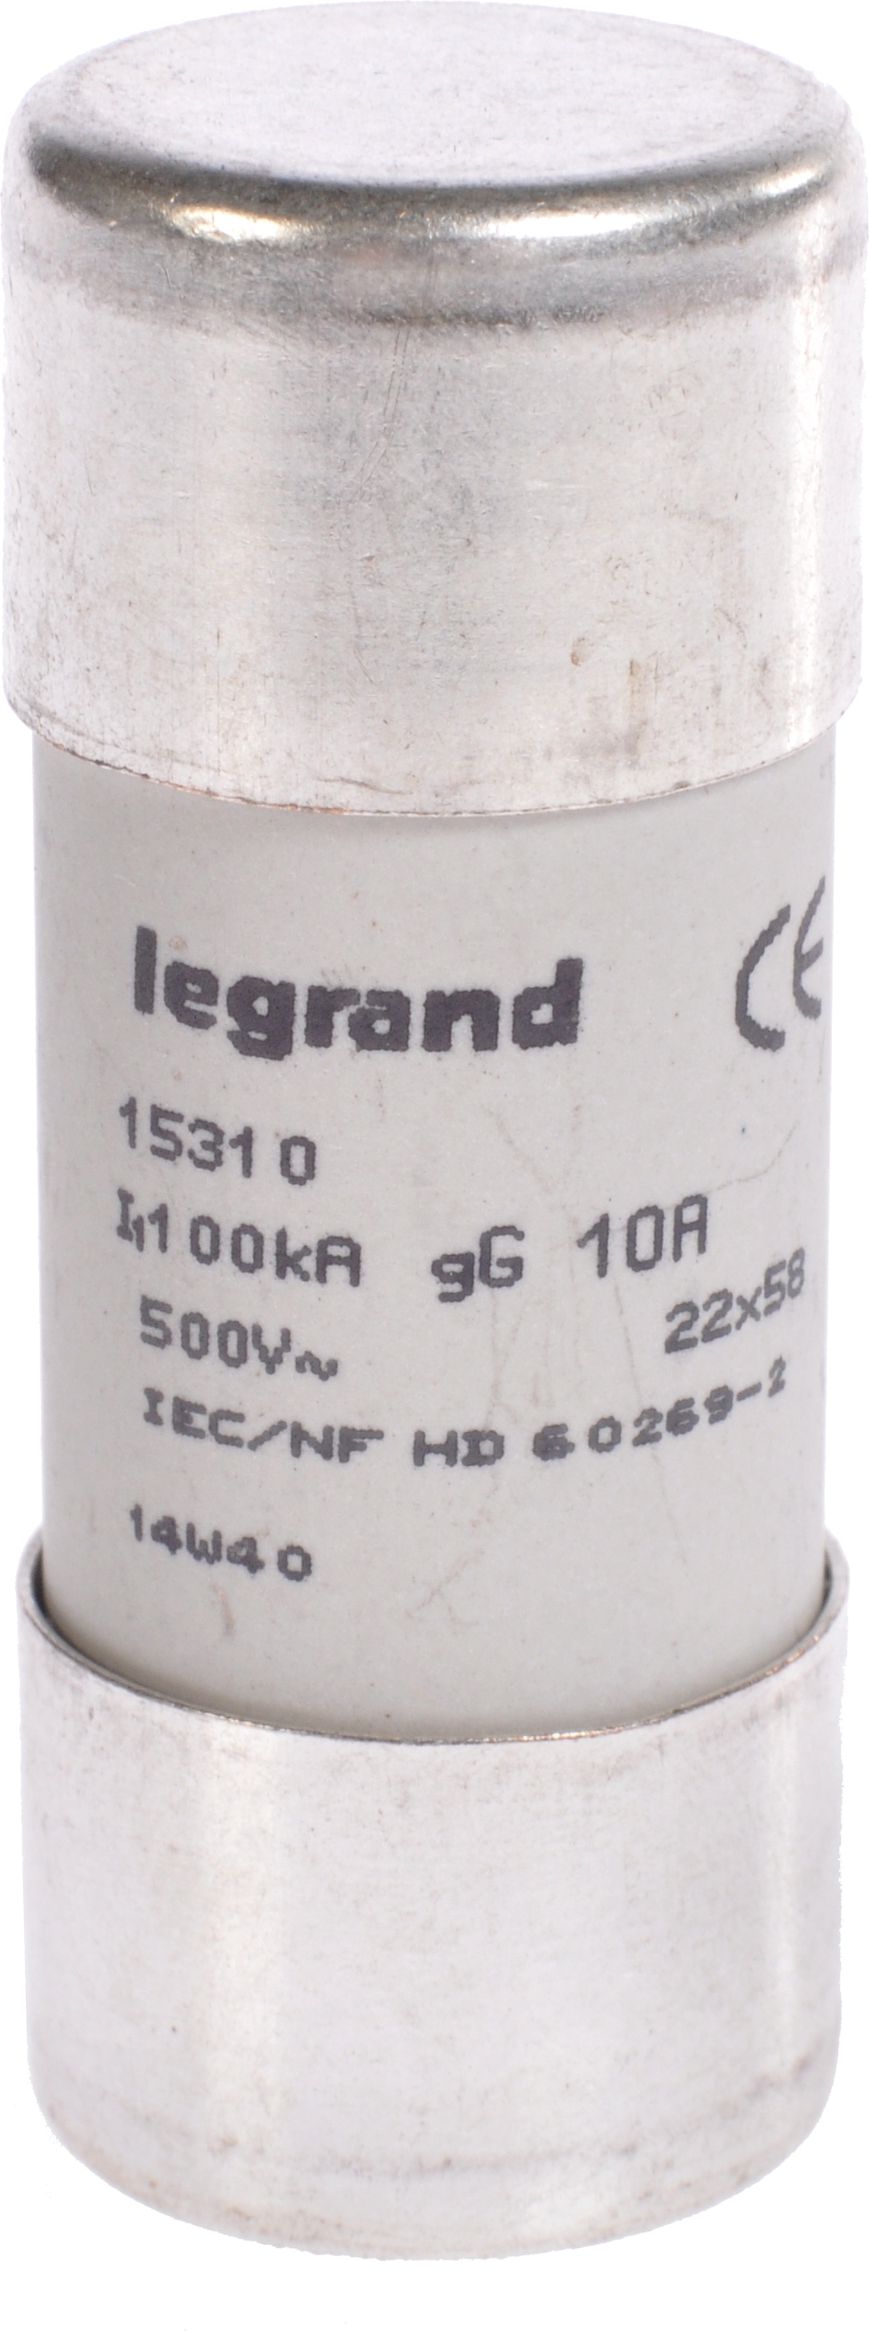 Siguranțe cilindrice 10A gL 500V HPC 22 x 58mm (015310)